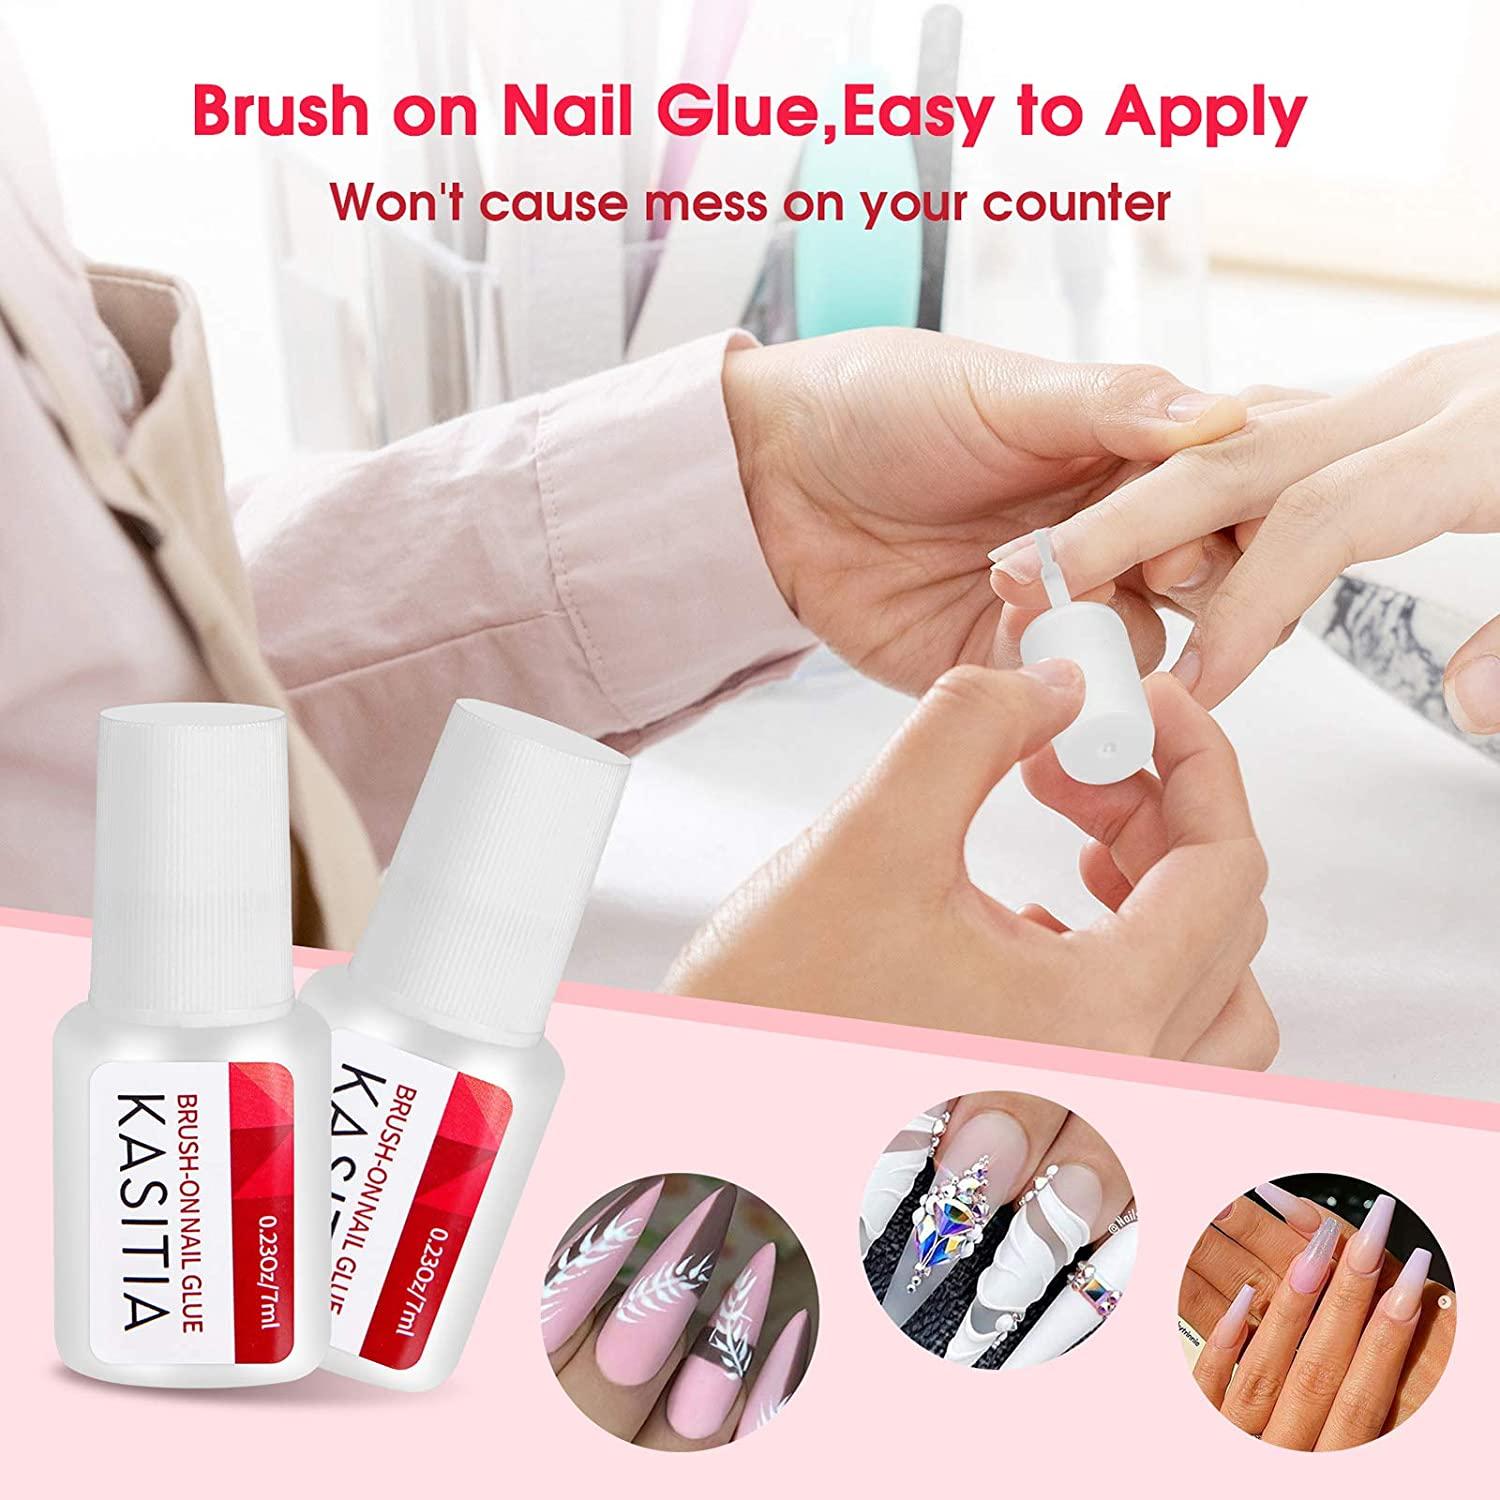 Brush on Nail Glue - 7 ml / 0.2 Fl oz